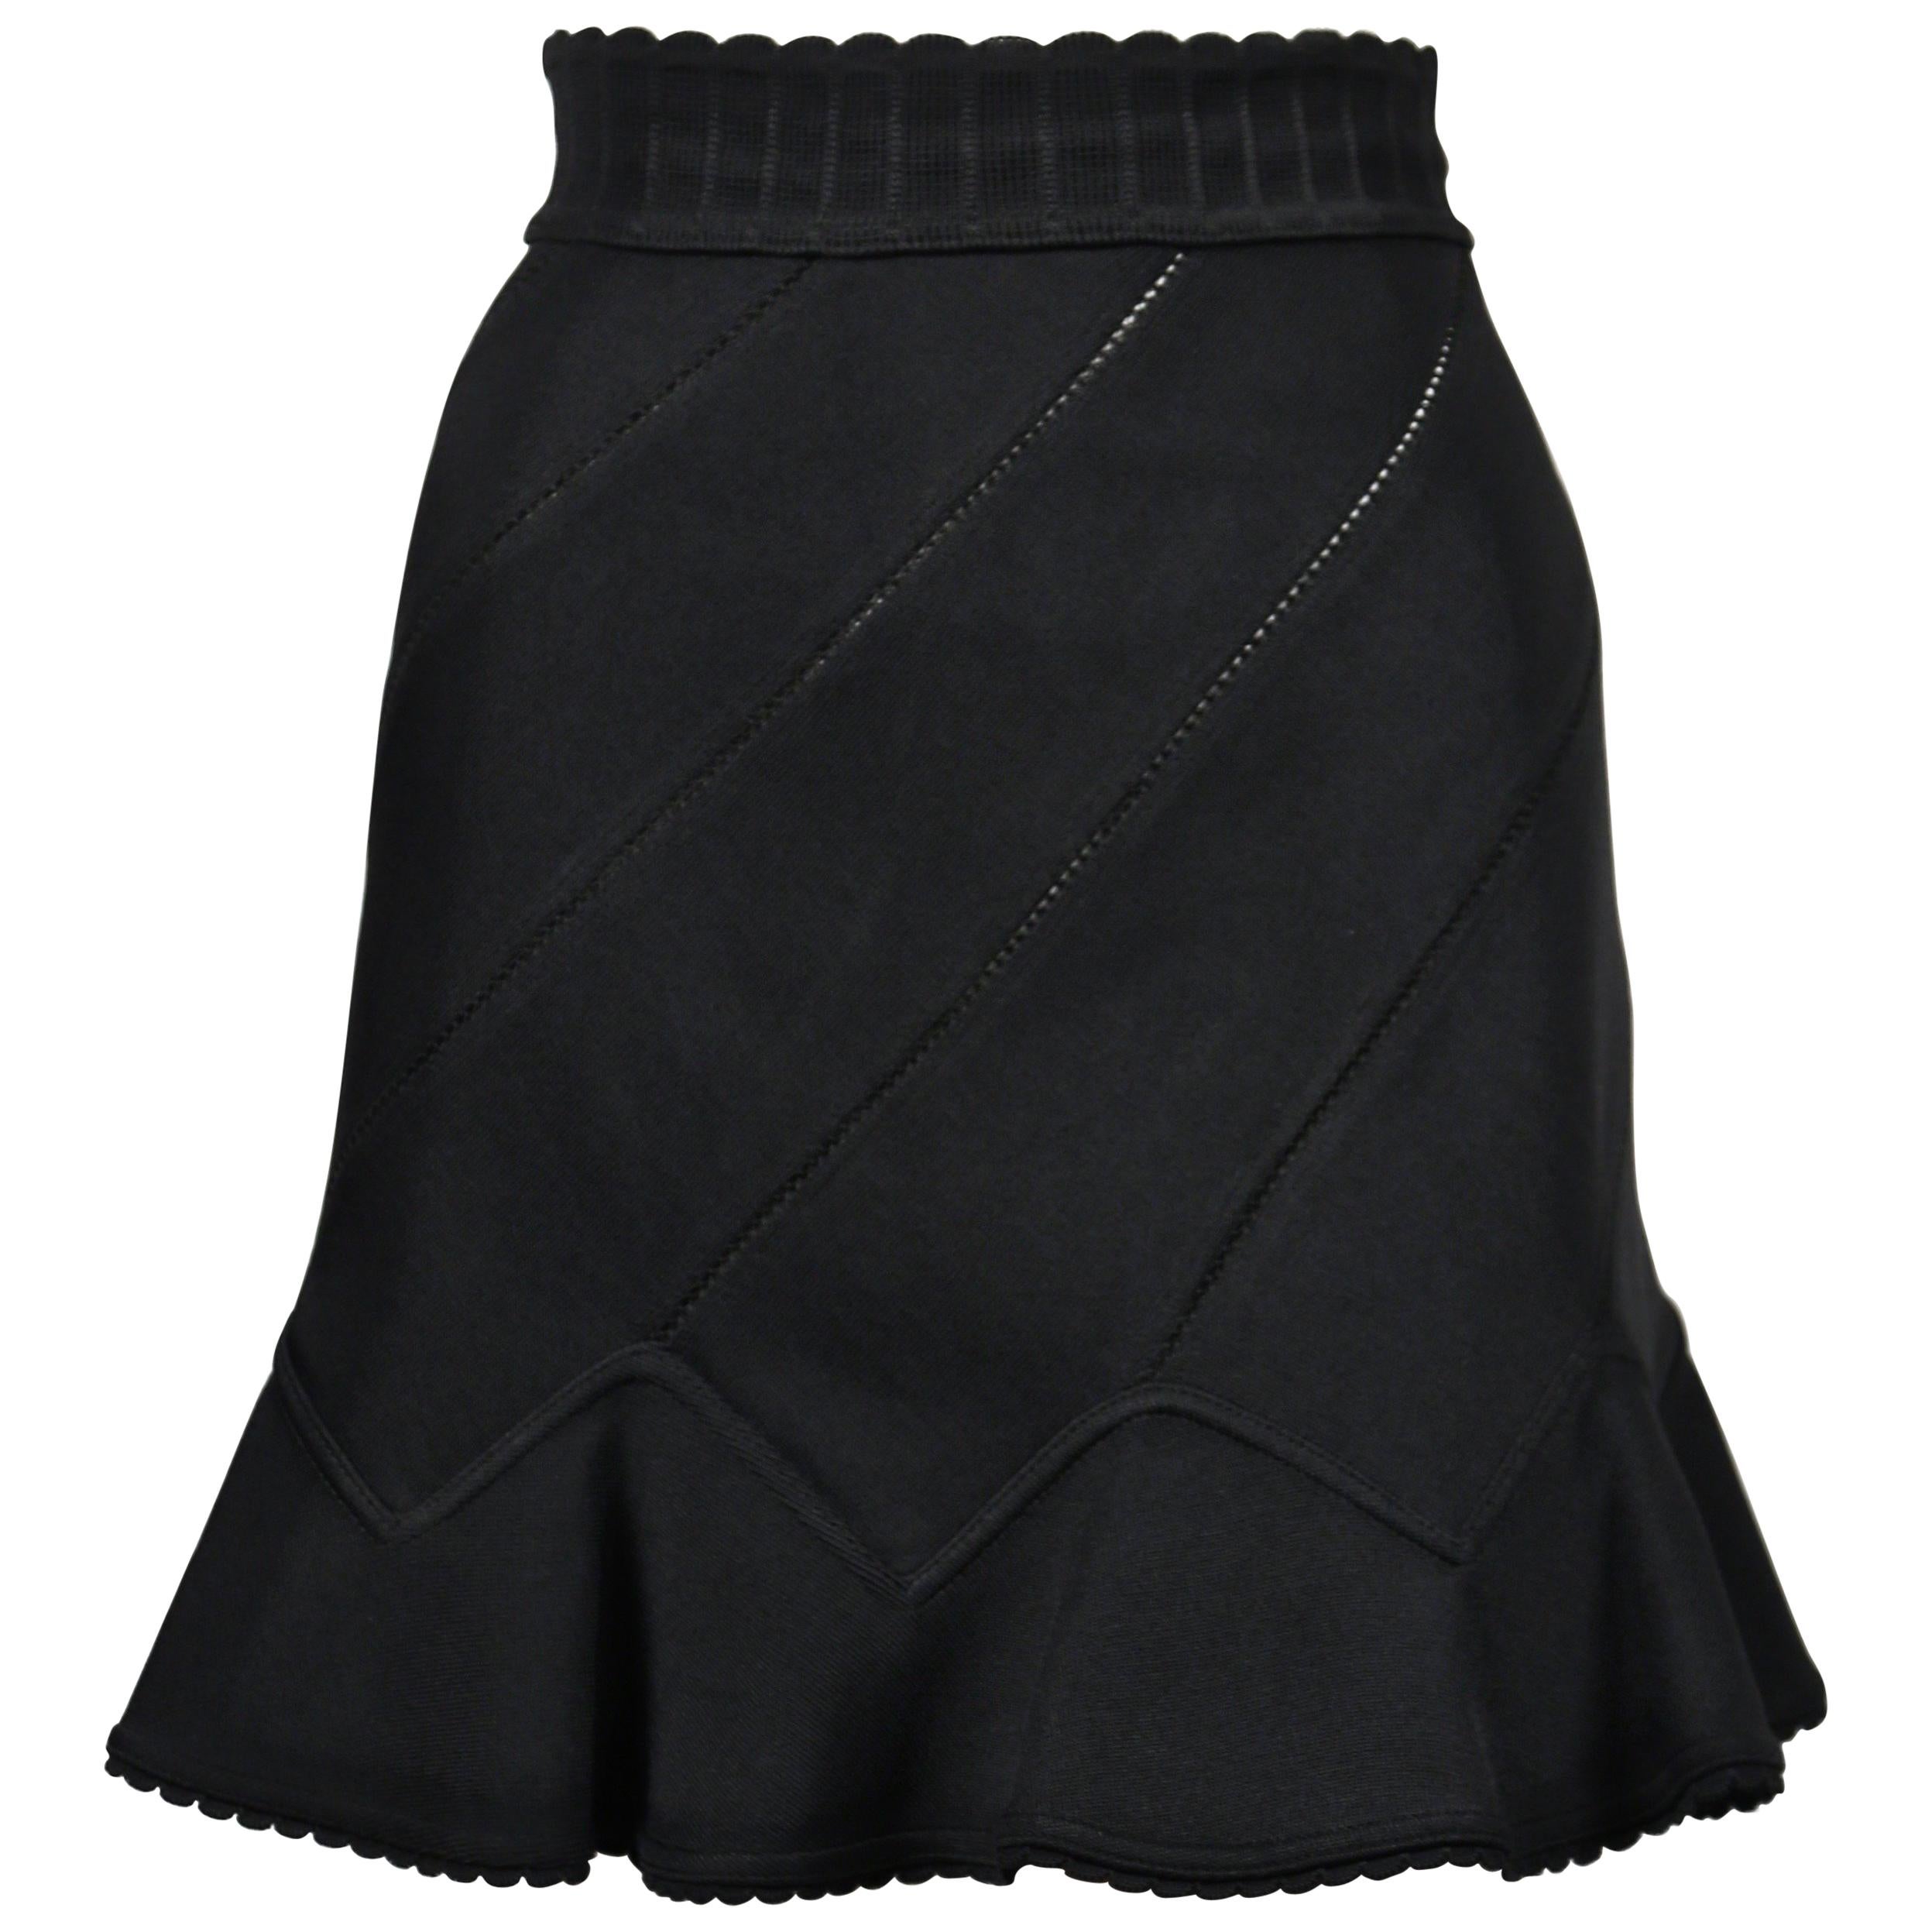 1992 AZZEDINE ALAIA black pointelle knit skirt with spiral seams & flounced hem